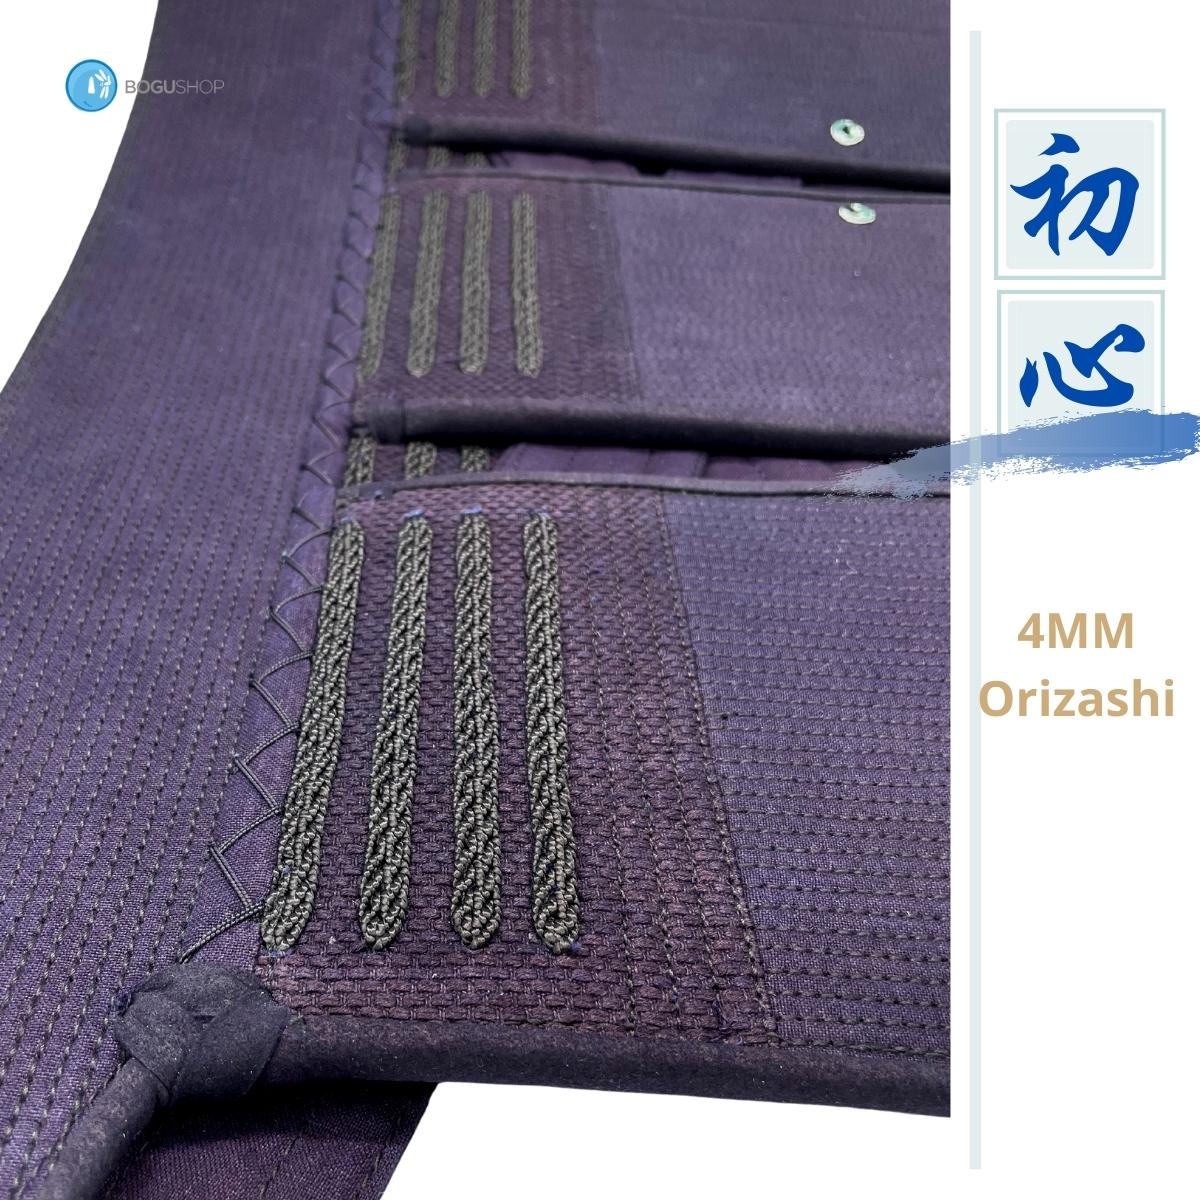 [Orizashi / Clarino] High Quality 4MM Machine Stitched Bogu Set (In Stock) #20